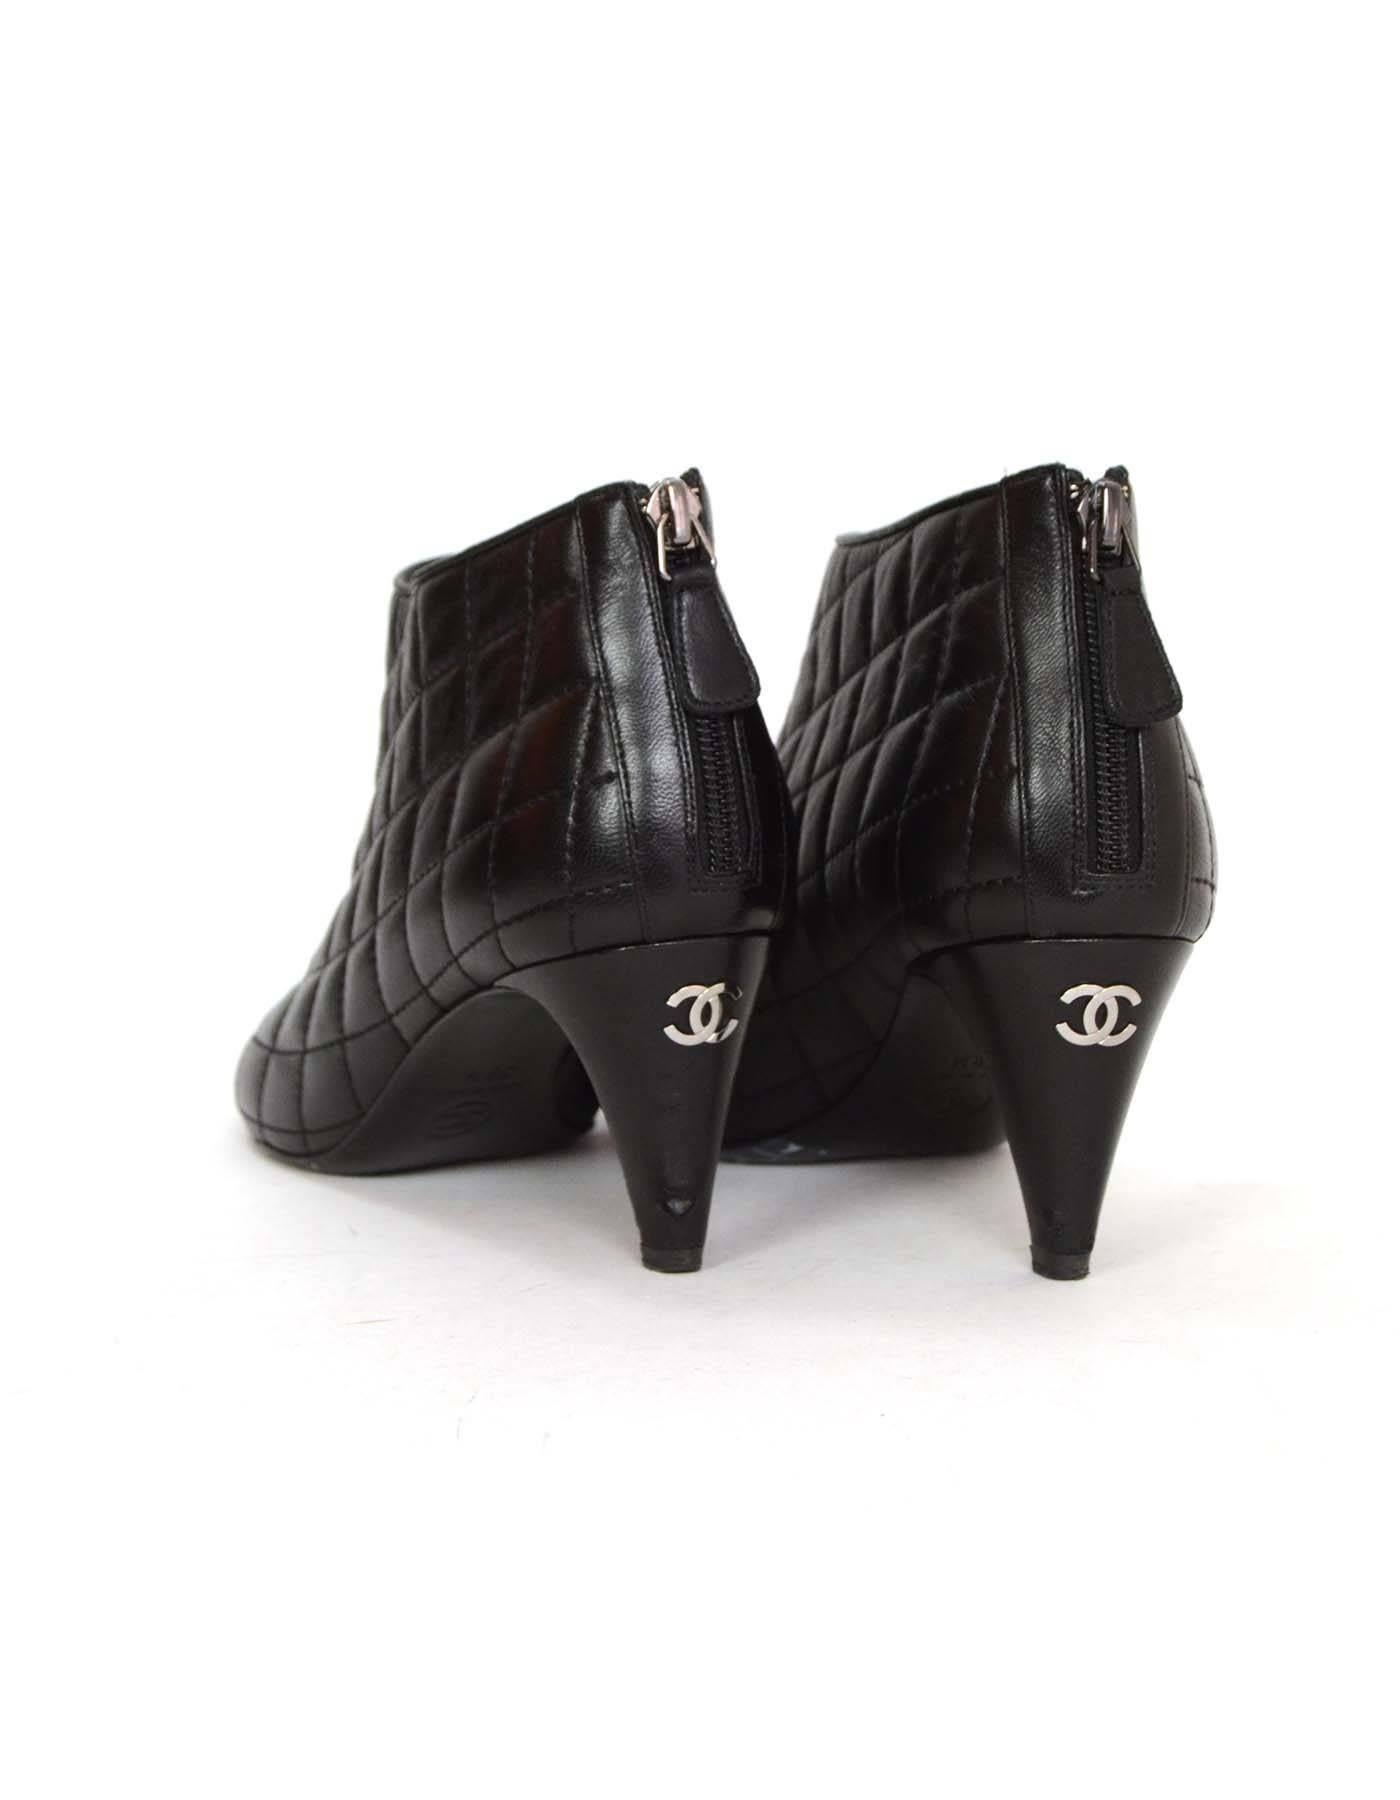 Women's Chanel Black Leather Quilted Heel Booties sz 8.5